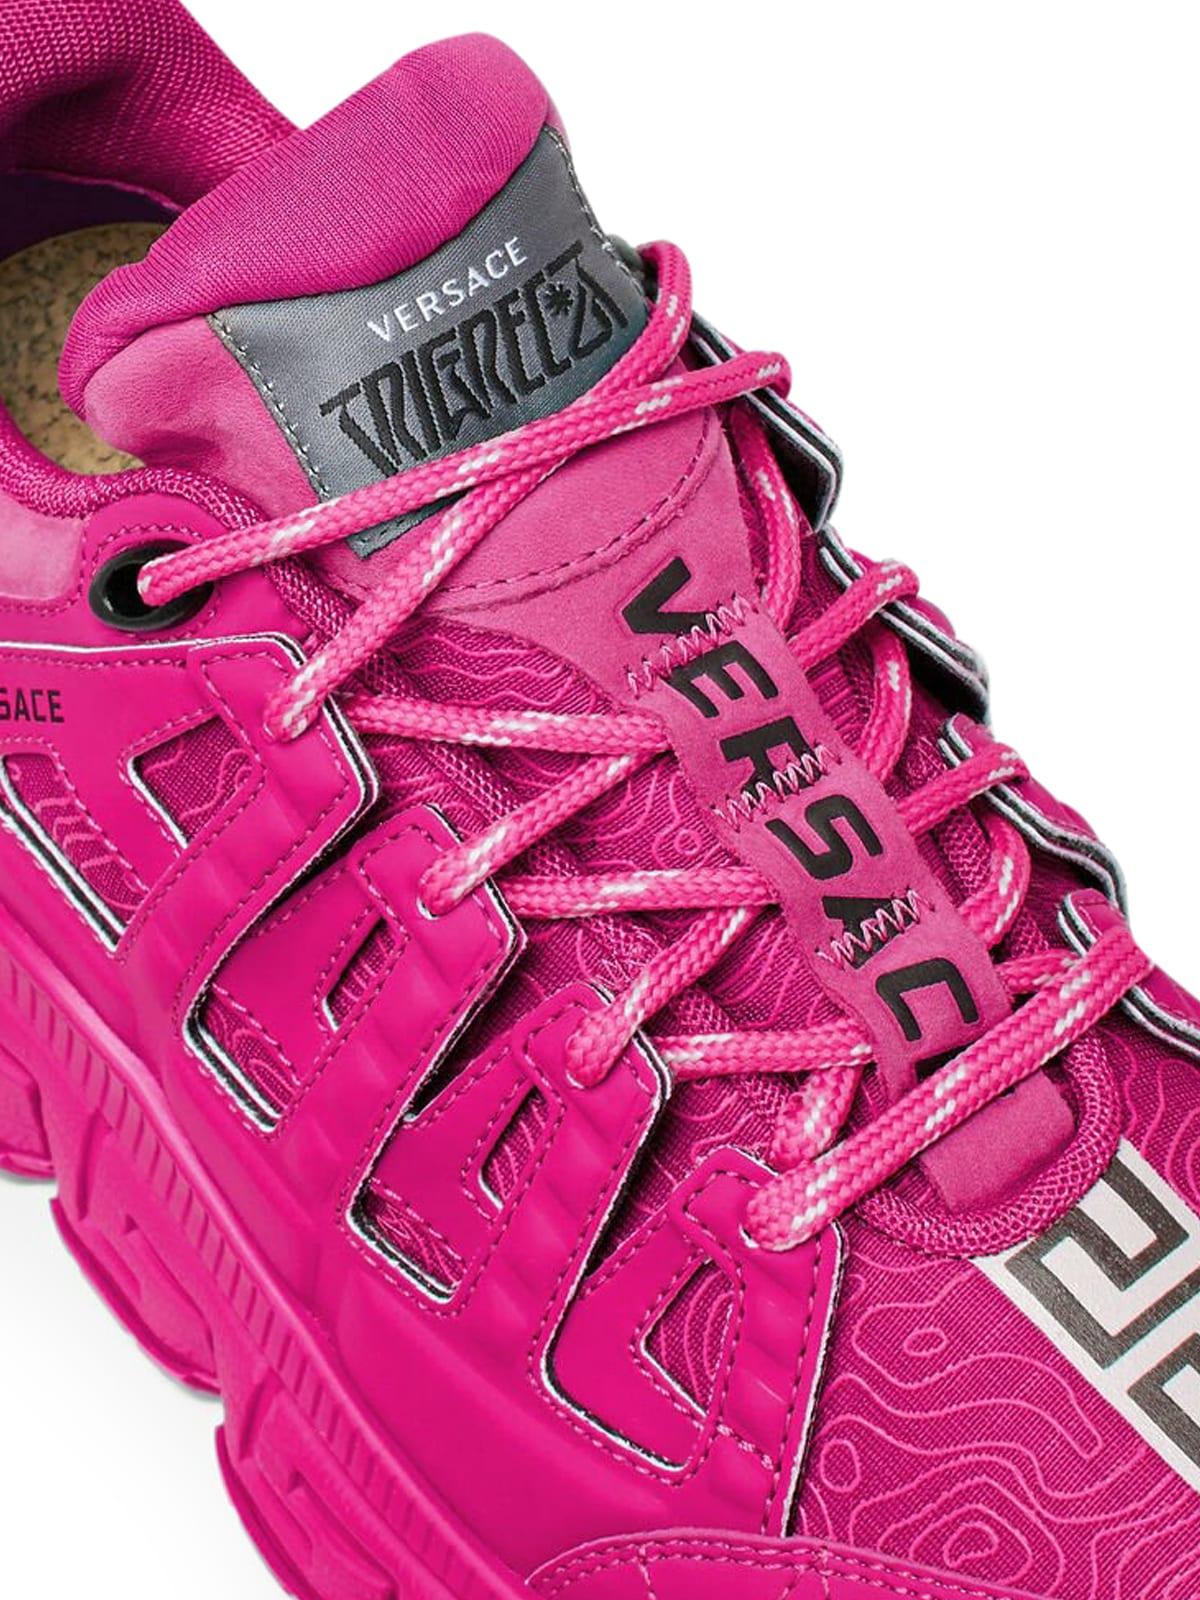 Versace Chain Reaction Sneakers, $895, farfetch.com